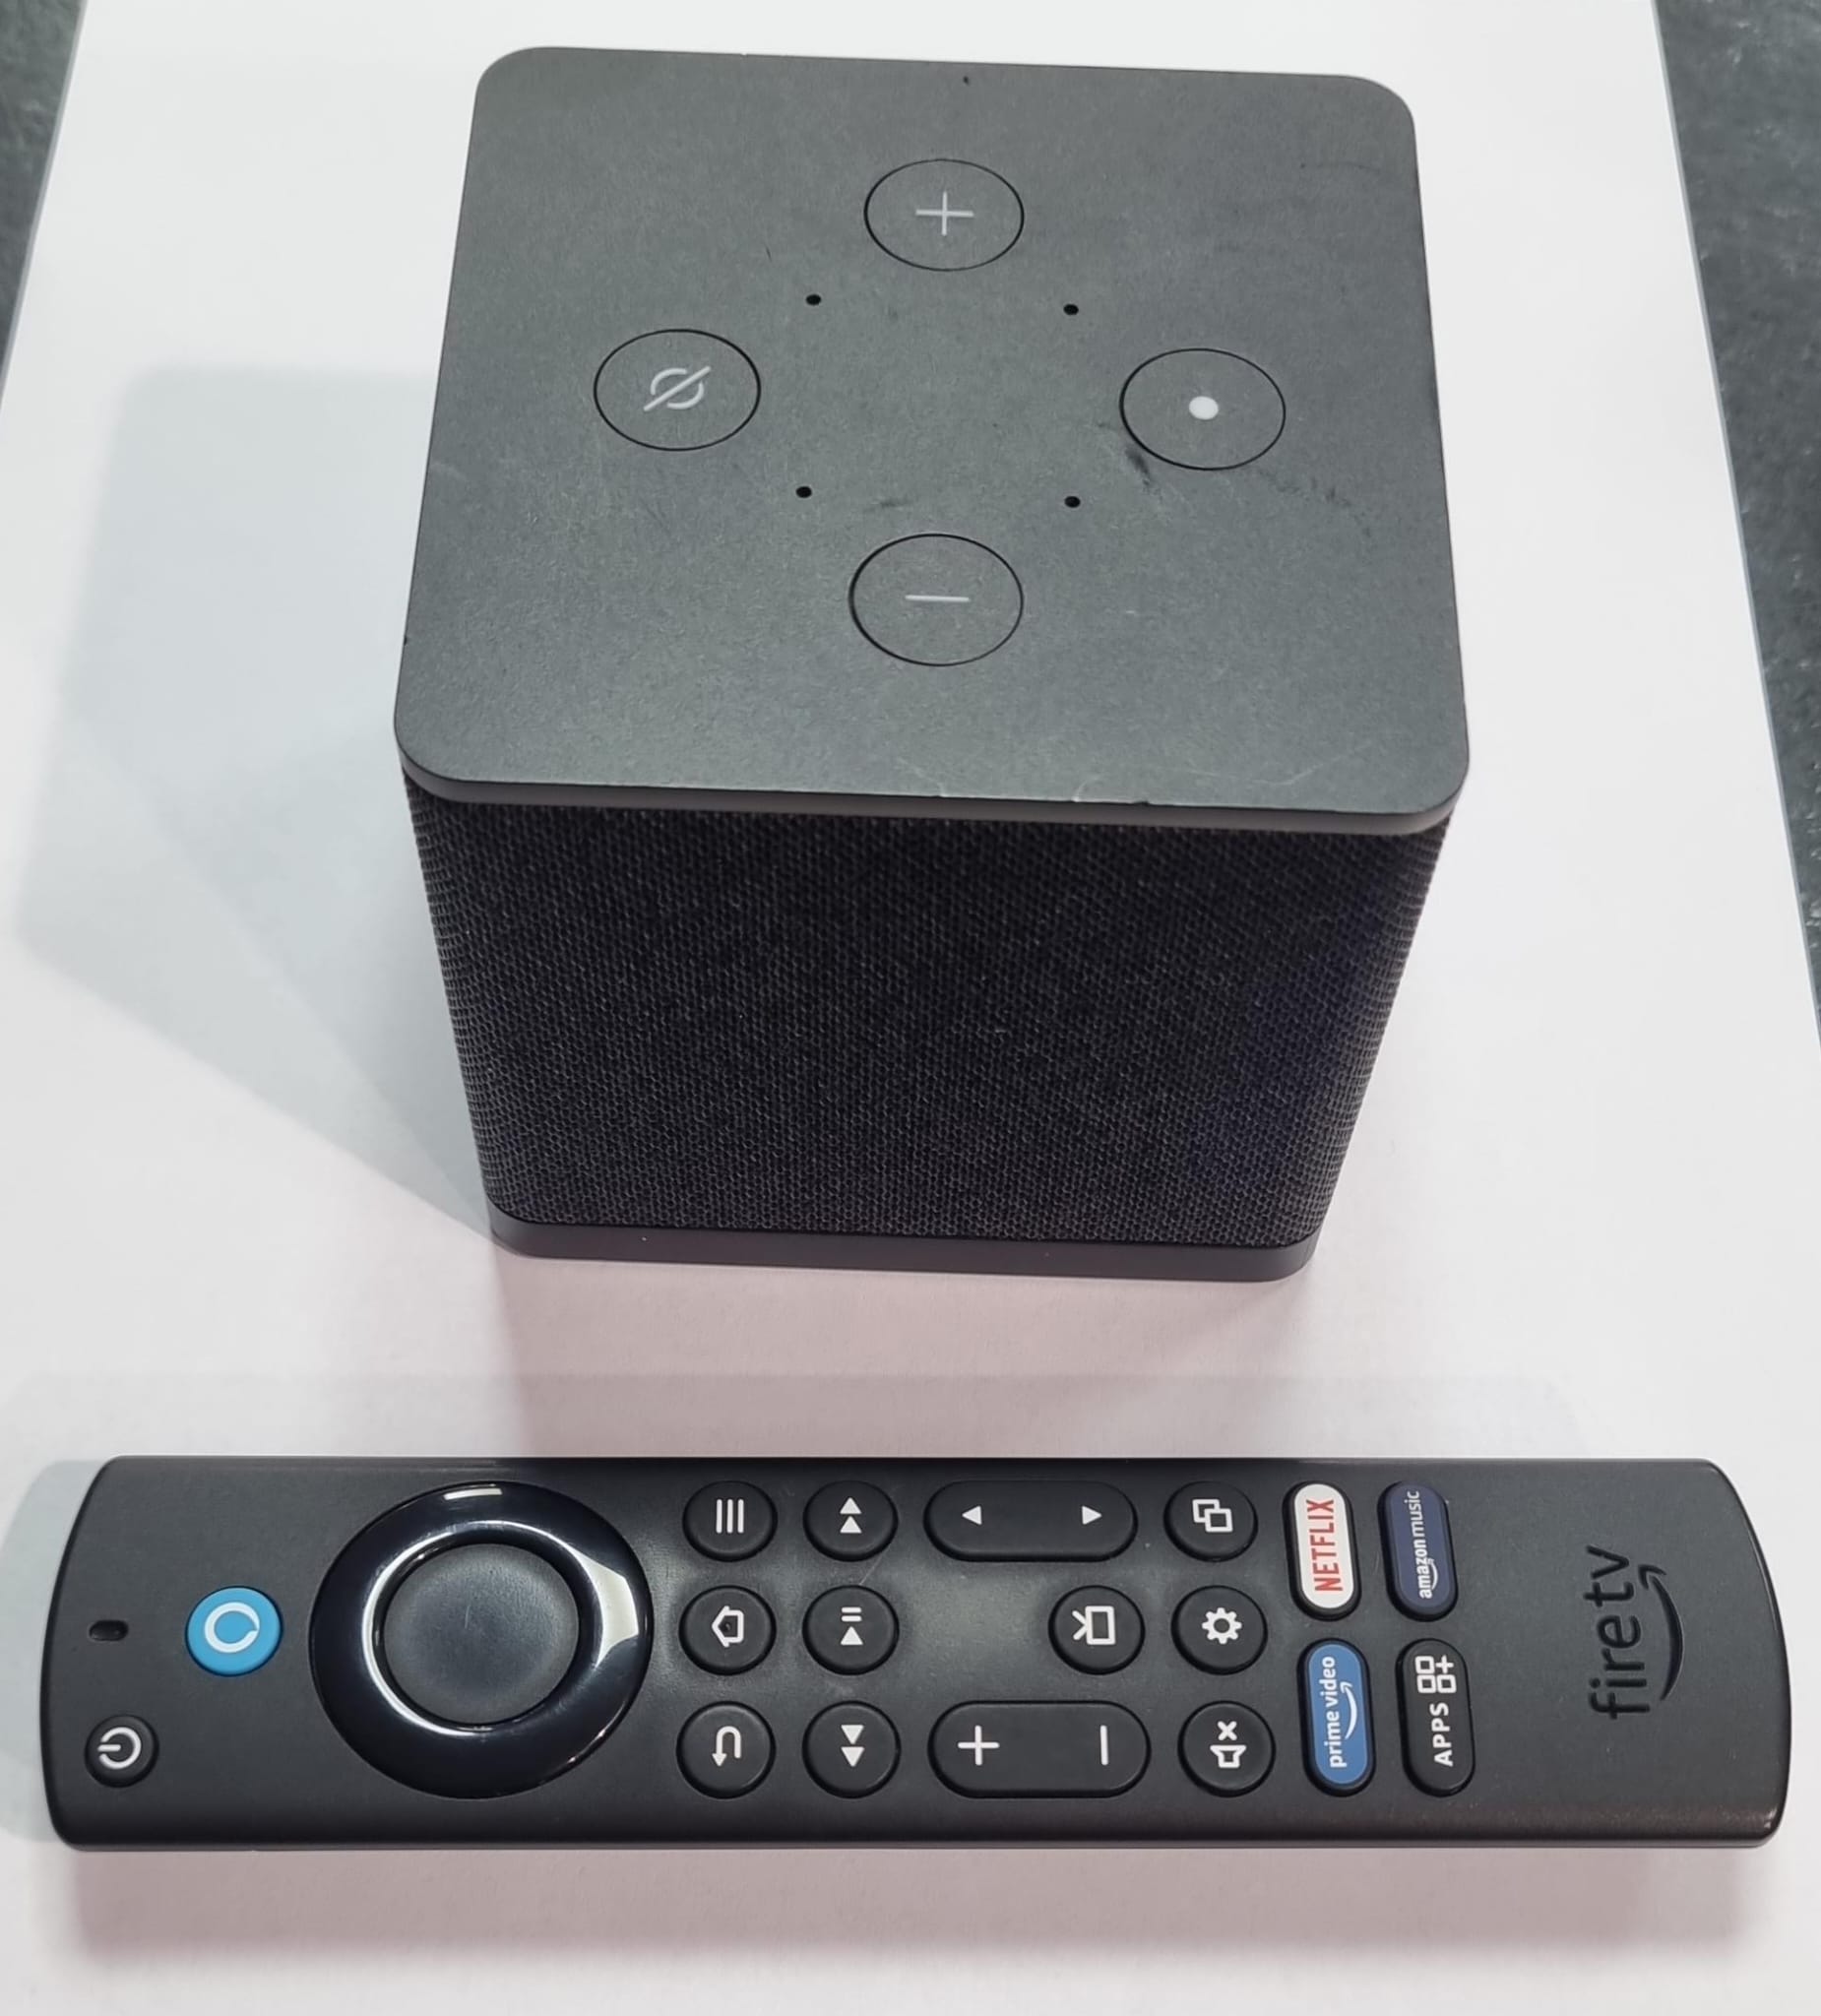 Amazon Cube Box - GA5Z9L - With Alexa Remote & Power Supply - No Box